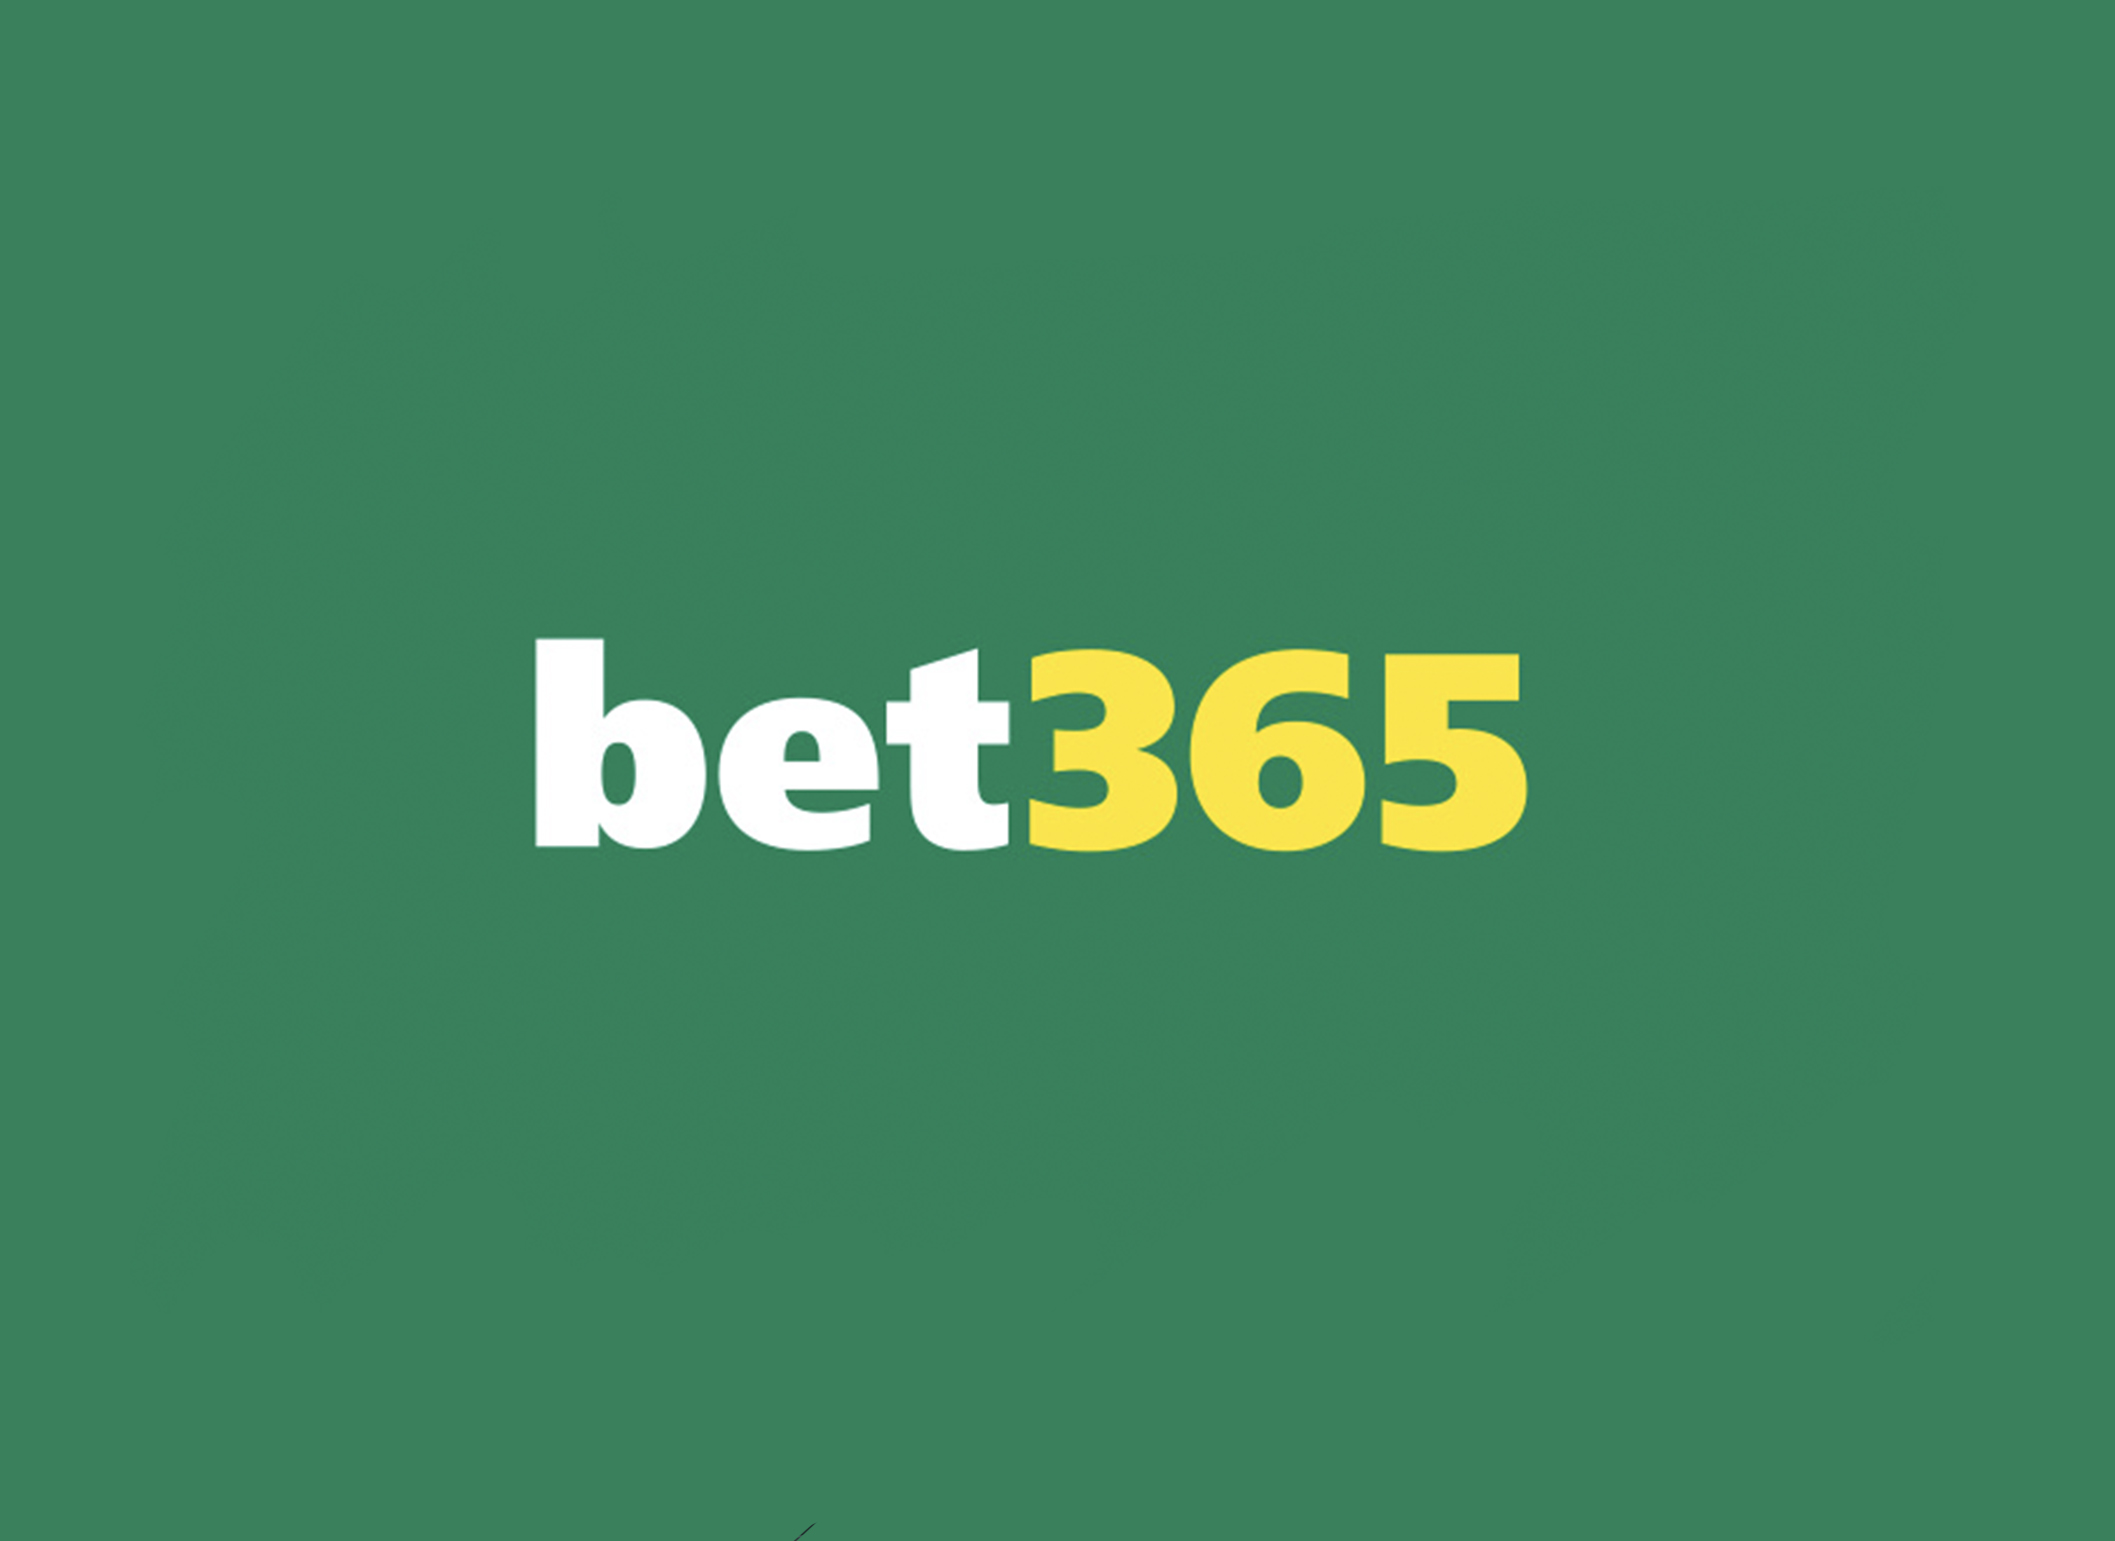 Bet365 online betting